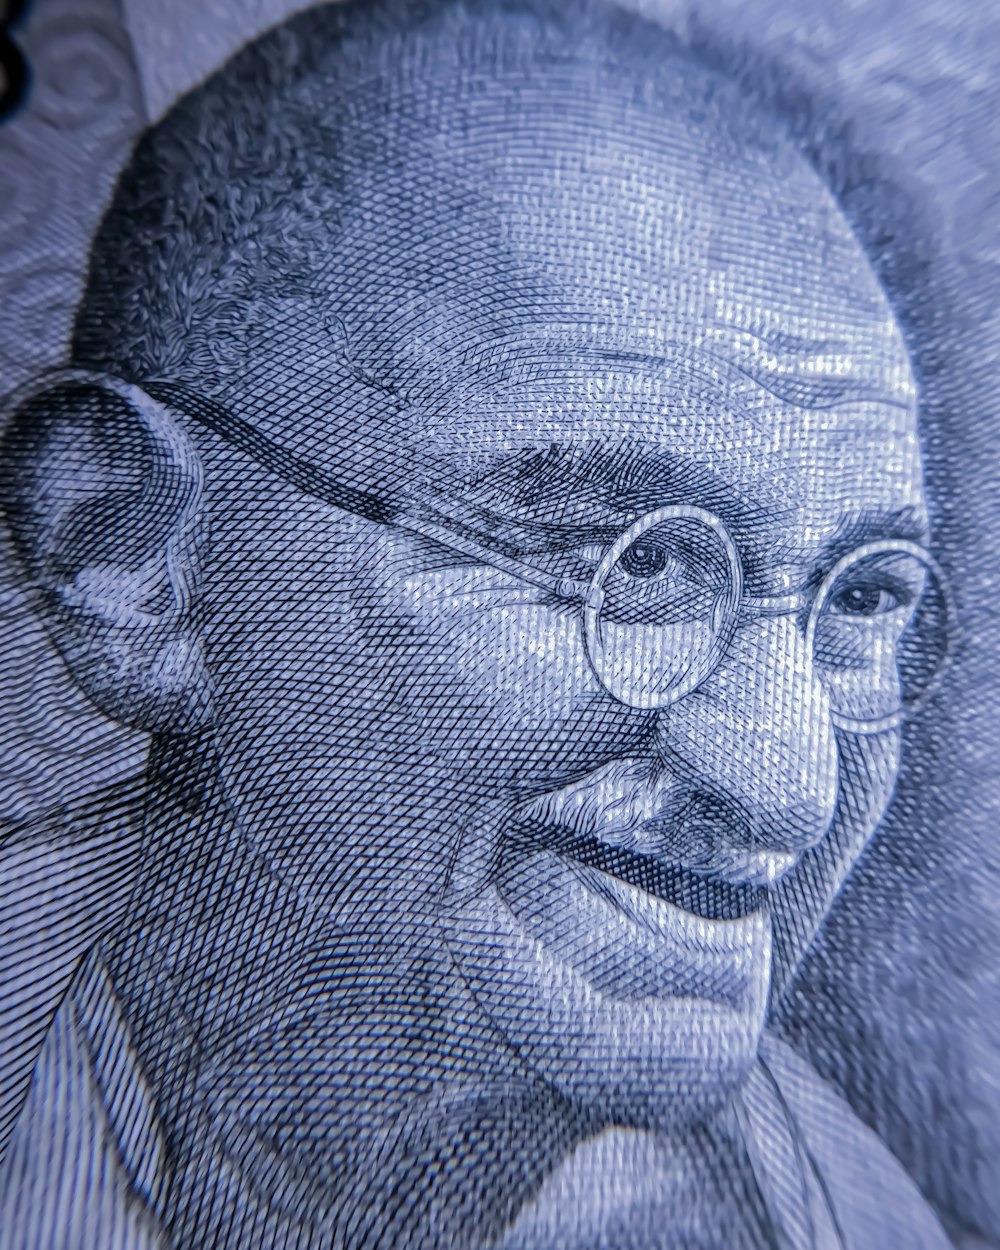 500+ Mahatma Gandhi Pictures [HD] | Download Free Images on Unsplash